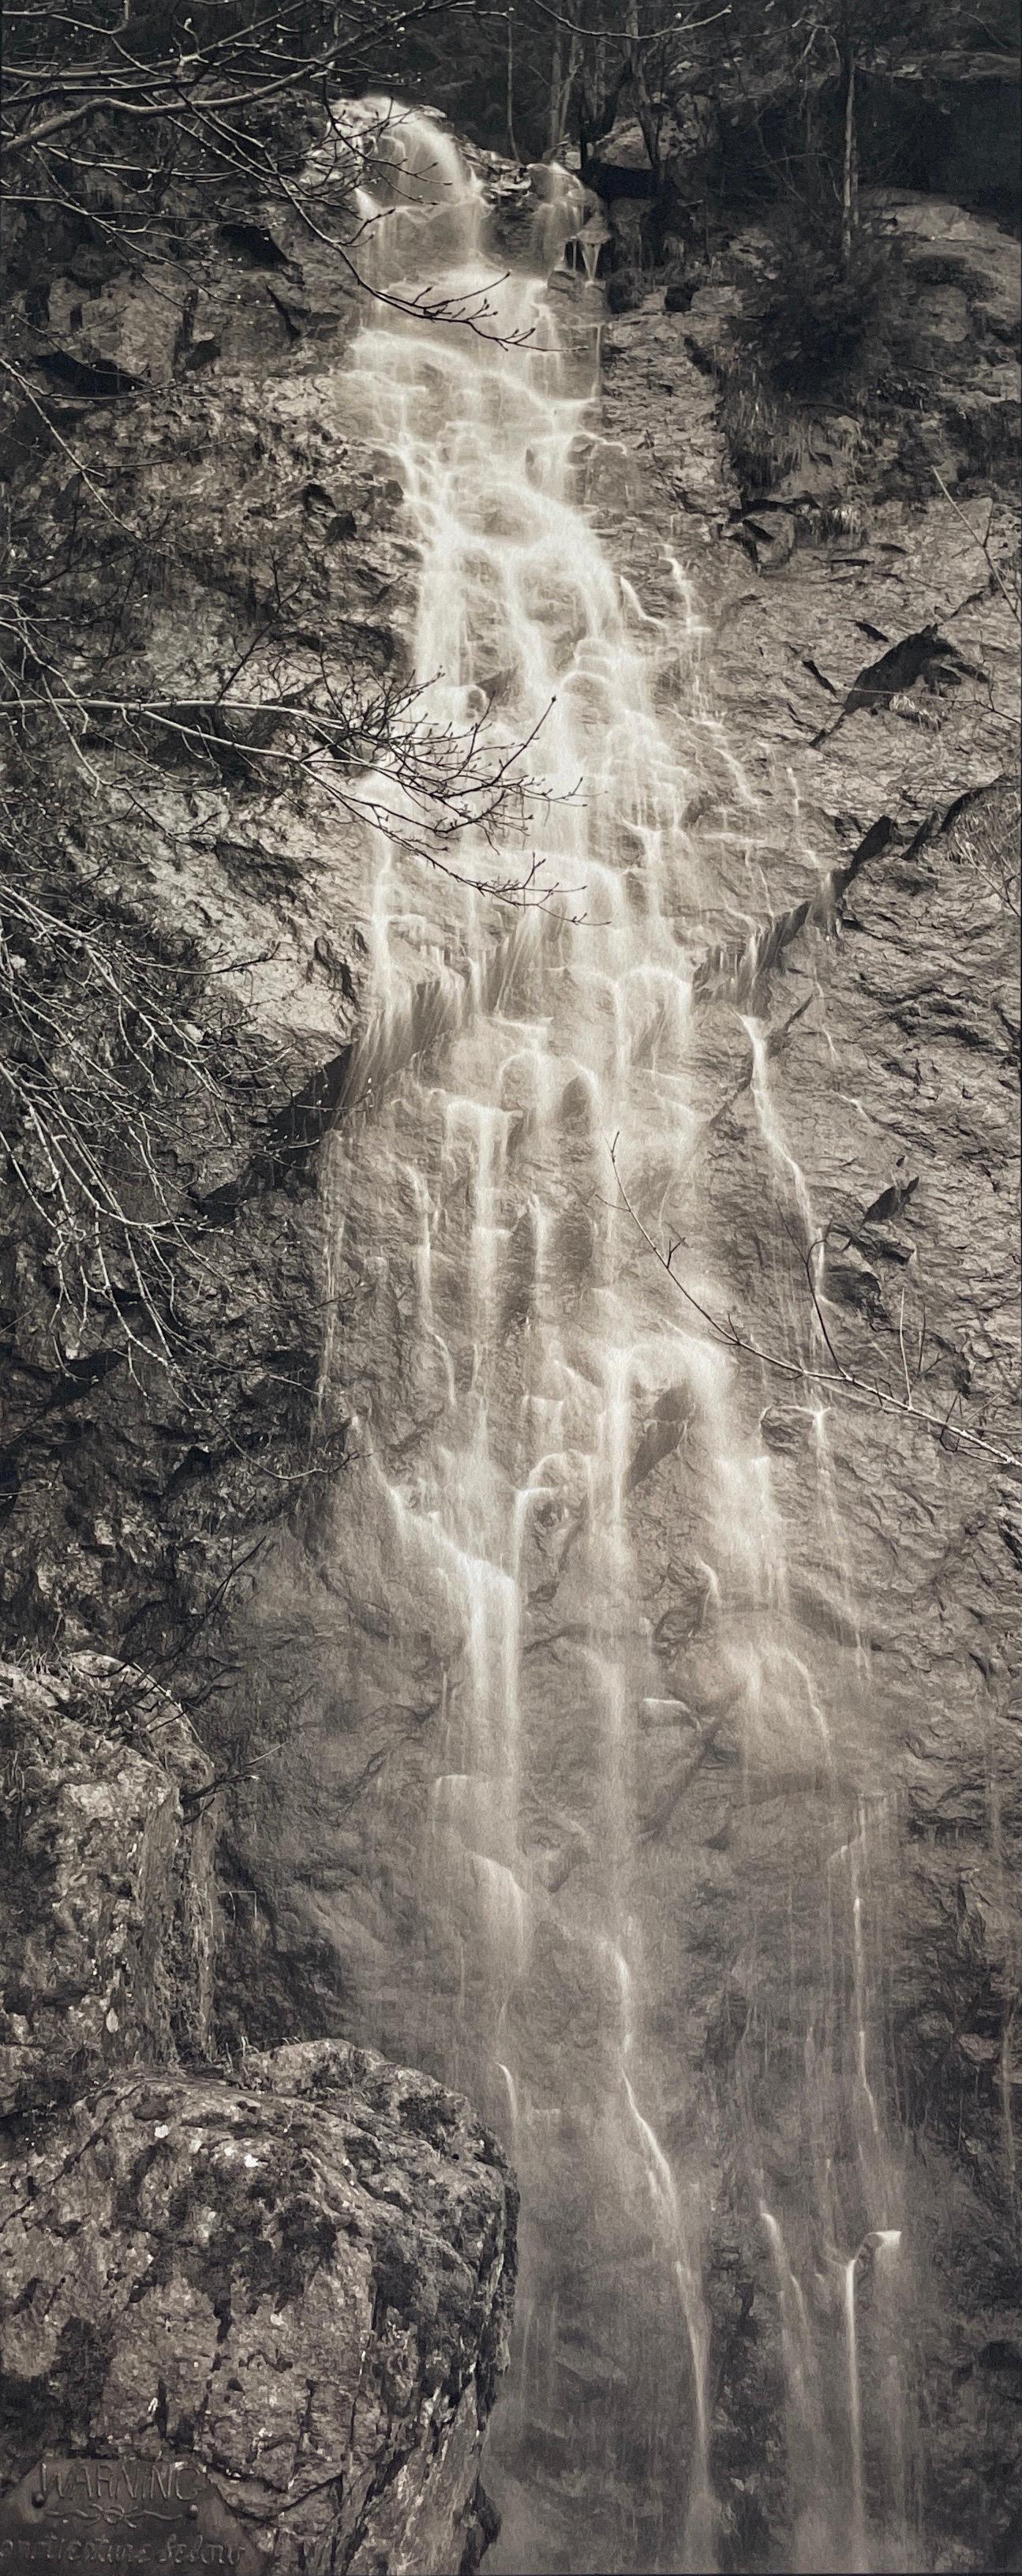 Landscape Photograph Kerik Kouklis - Falls, Pacific House California Waterfall